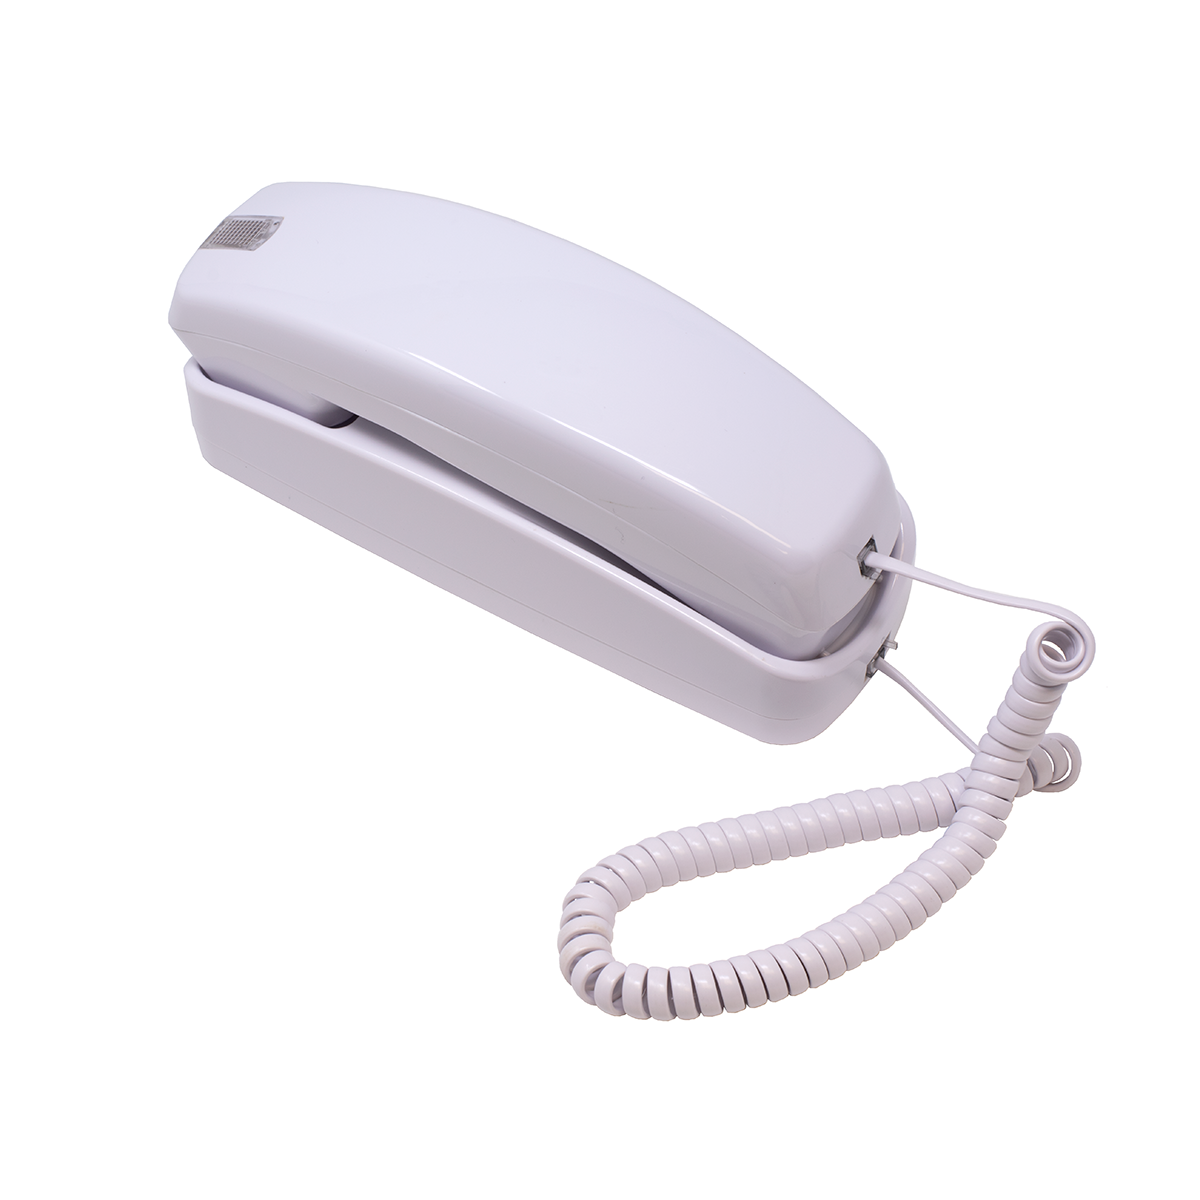 Trimline White Analog Telephone (Top View)